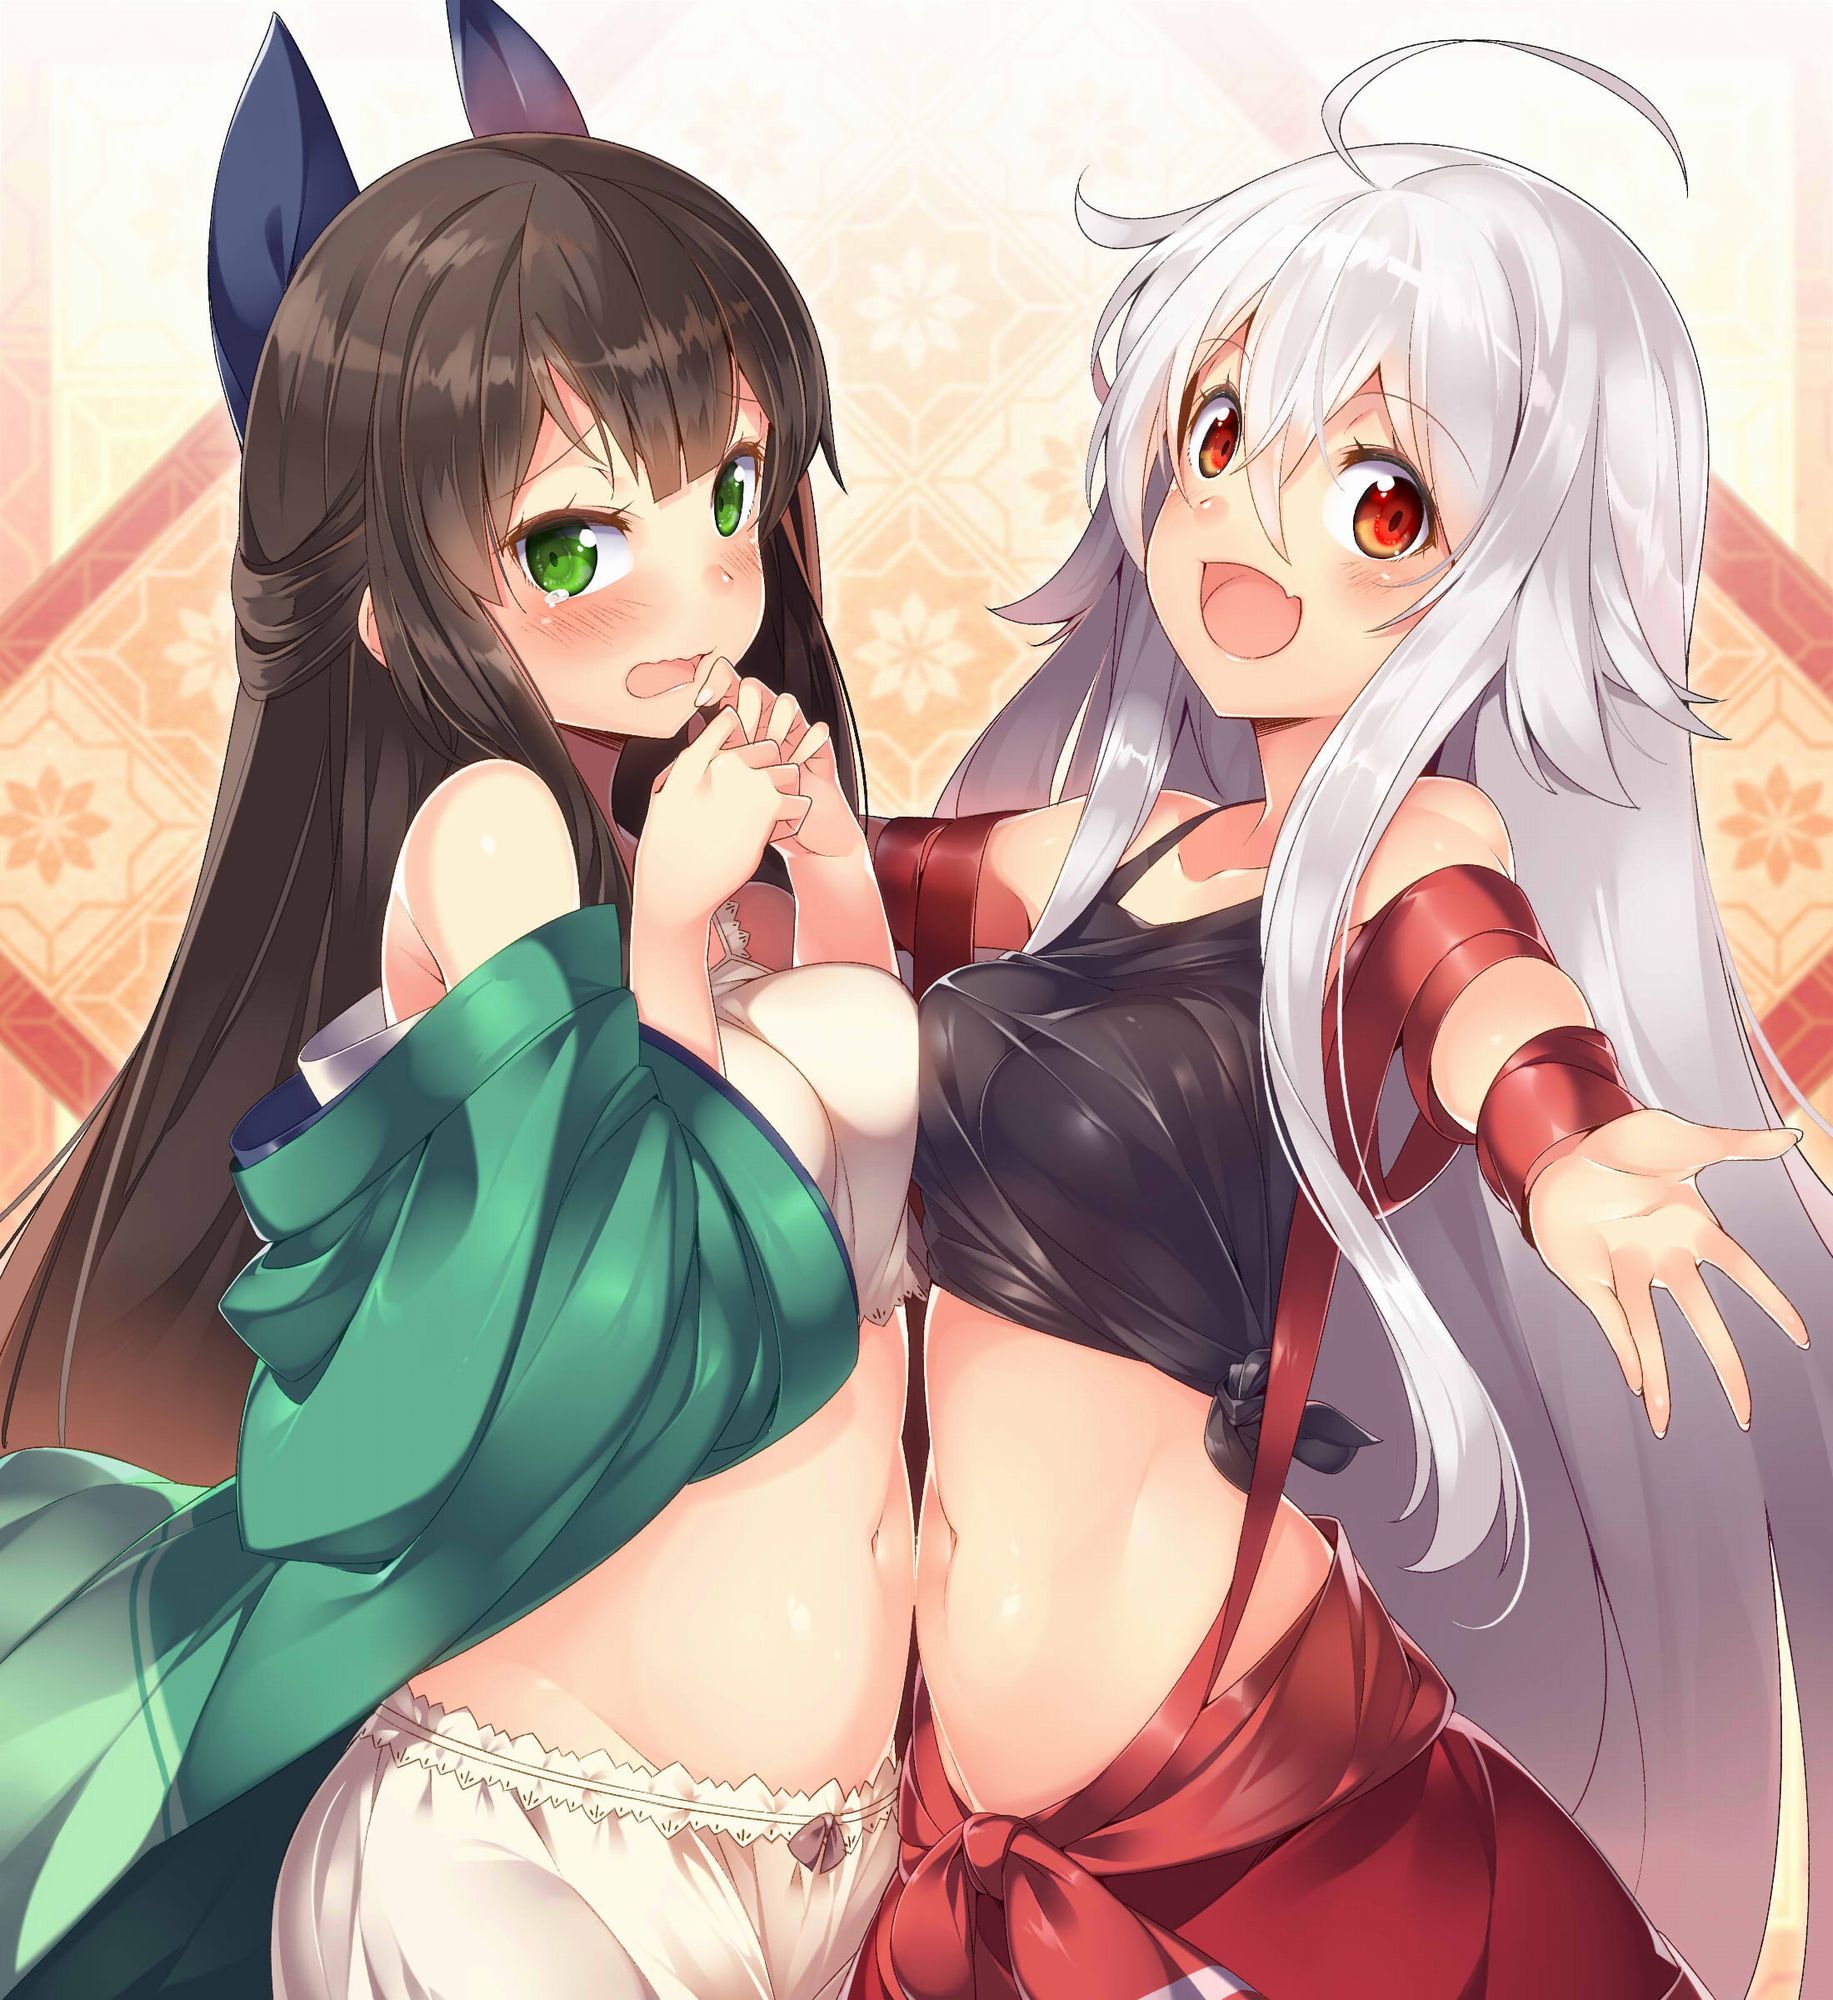 Erotic anime summary Erotic image [secondary erotic] whose are pressed against Nani and Munyu 28